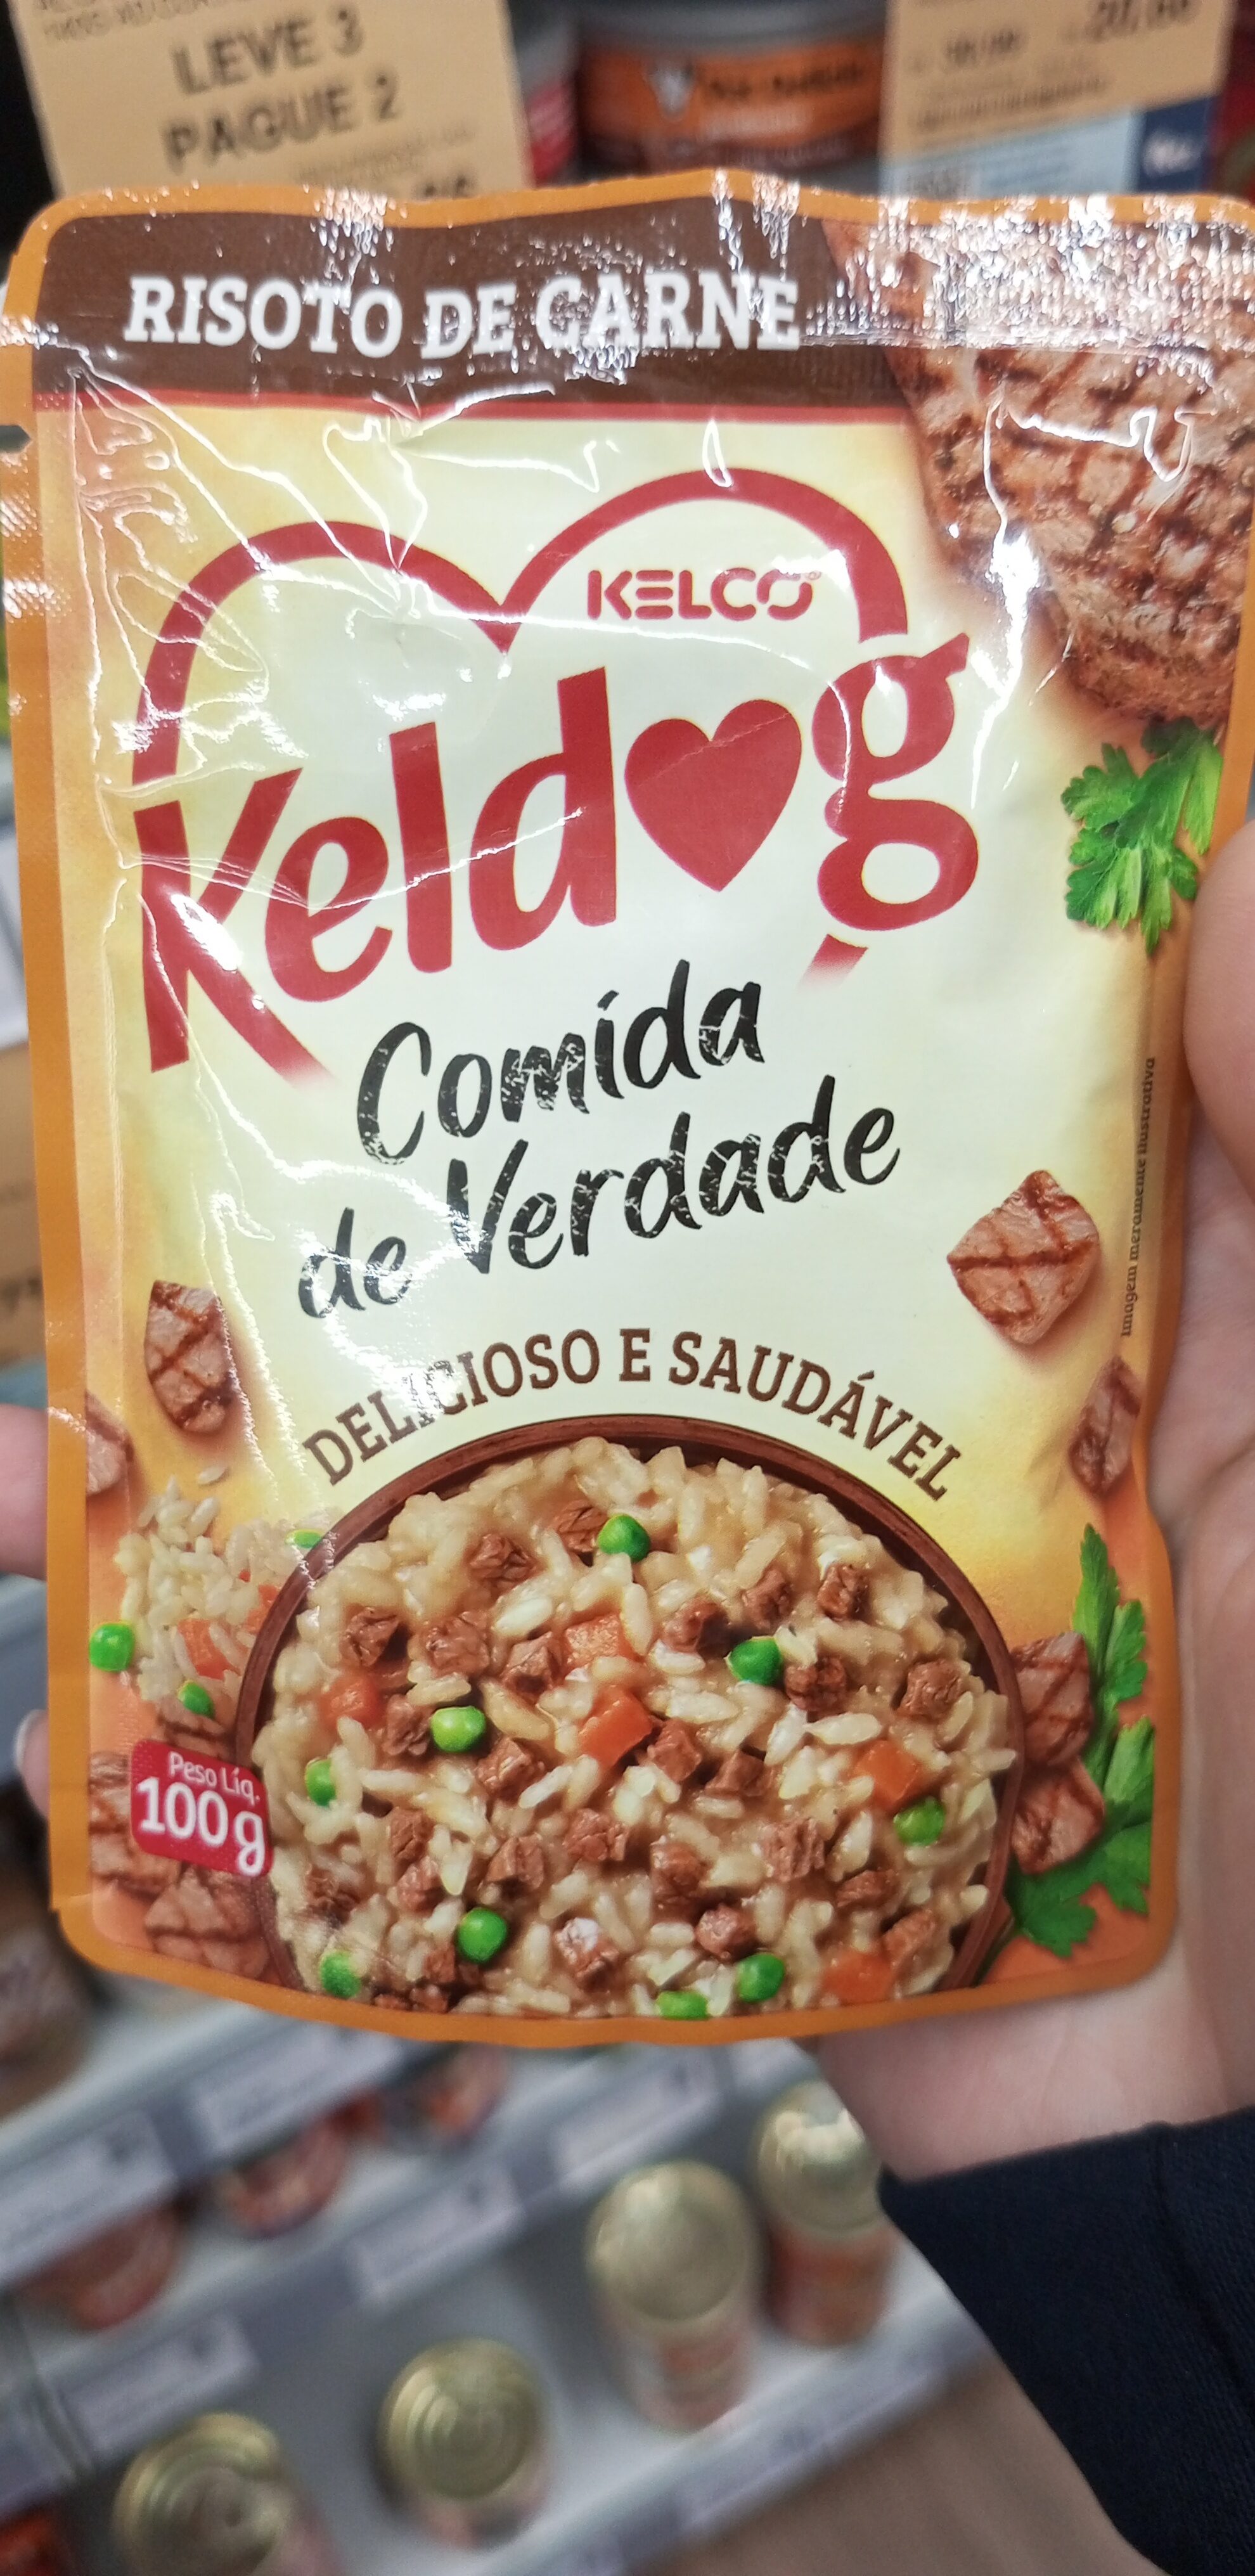 Alimento cães sachê keldog 100g risoto de frango - Product - pt